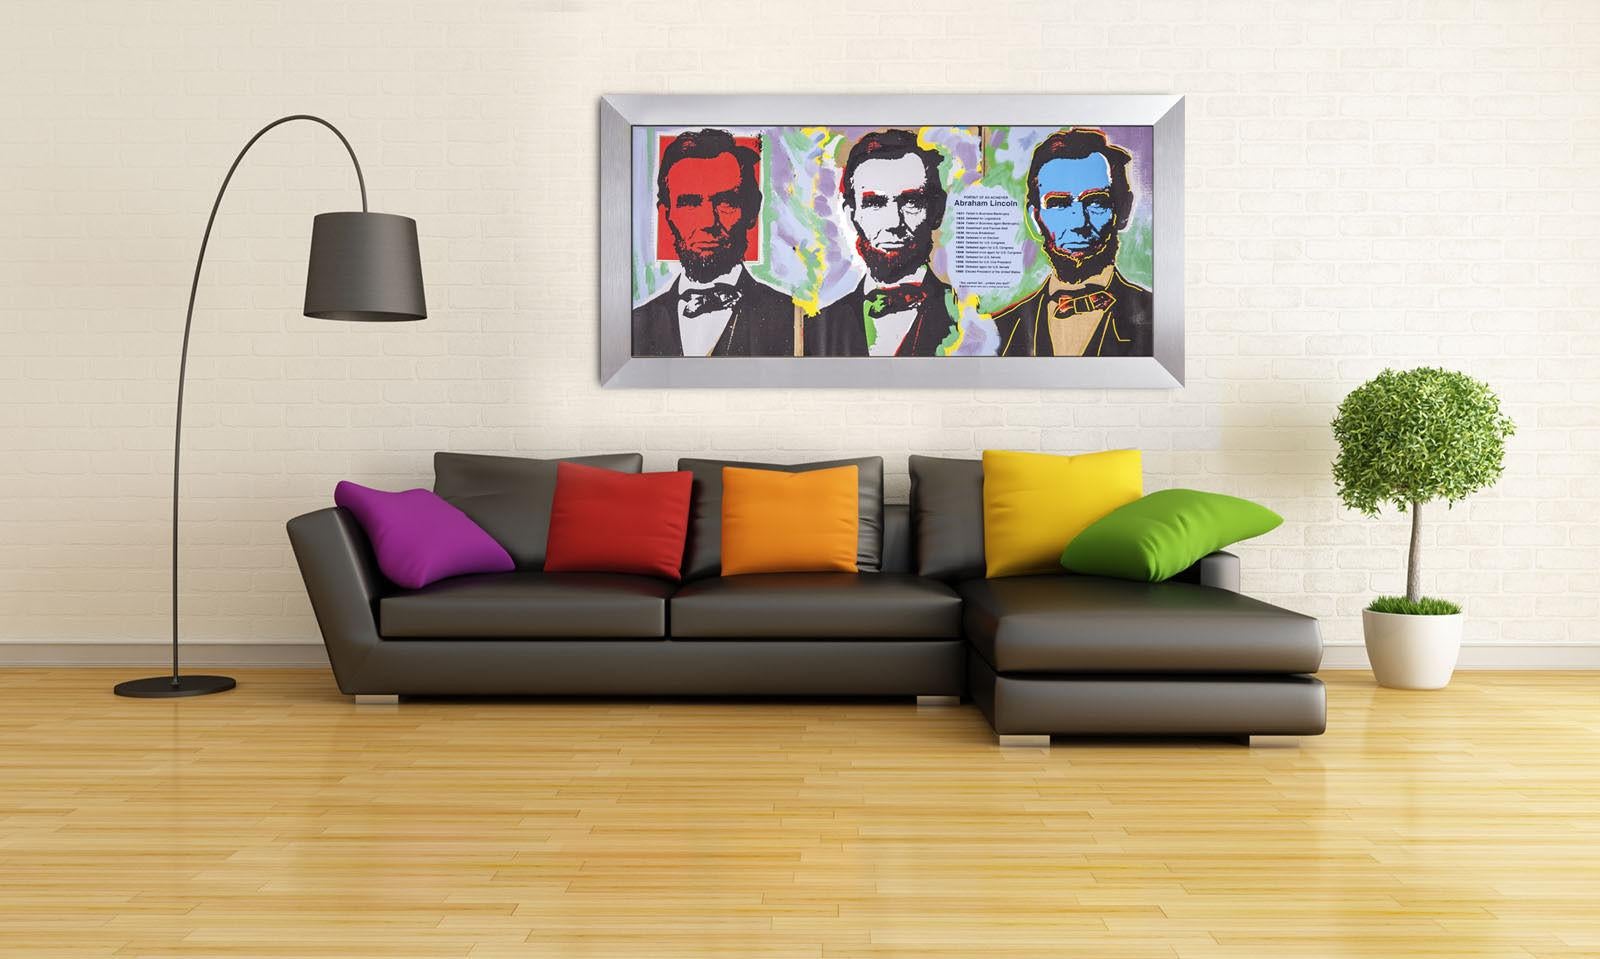 Artist: Steve Kaufman
Title: Three Abe Lincoln's
Medium: Original Oil Painting on Screen print Canvas
Size: 23.5